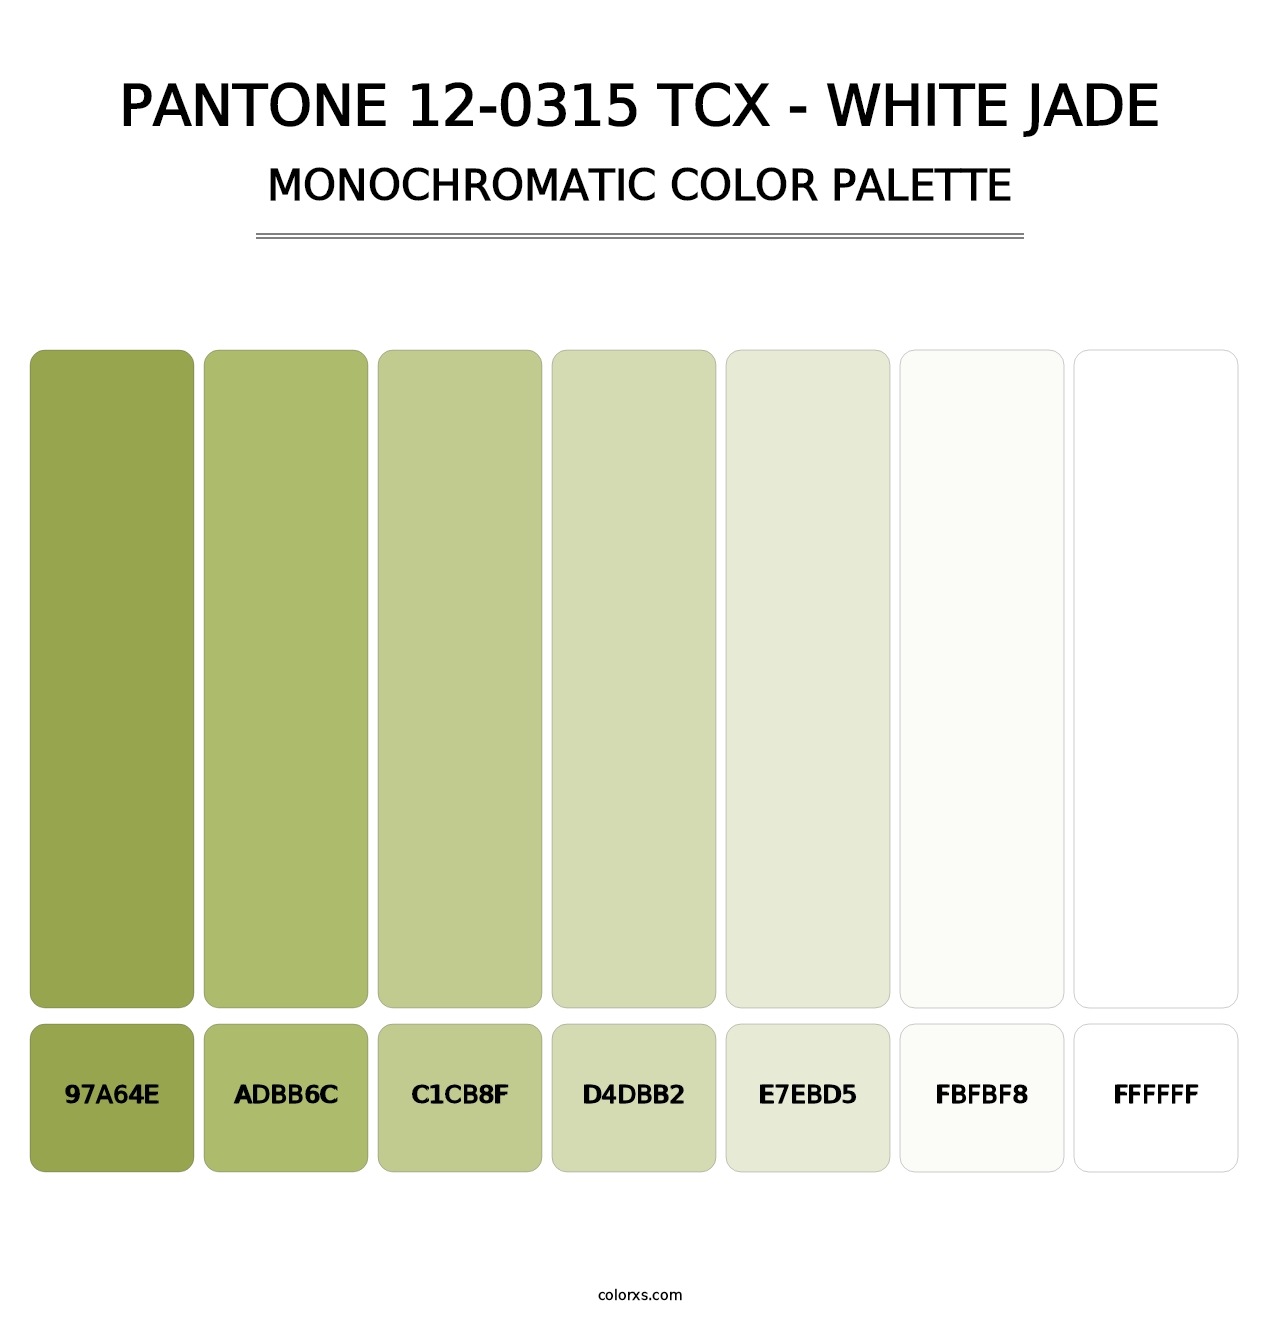 PANTONE 12-0315 TCX - White Jade - Monochromatic Color Palette